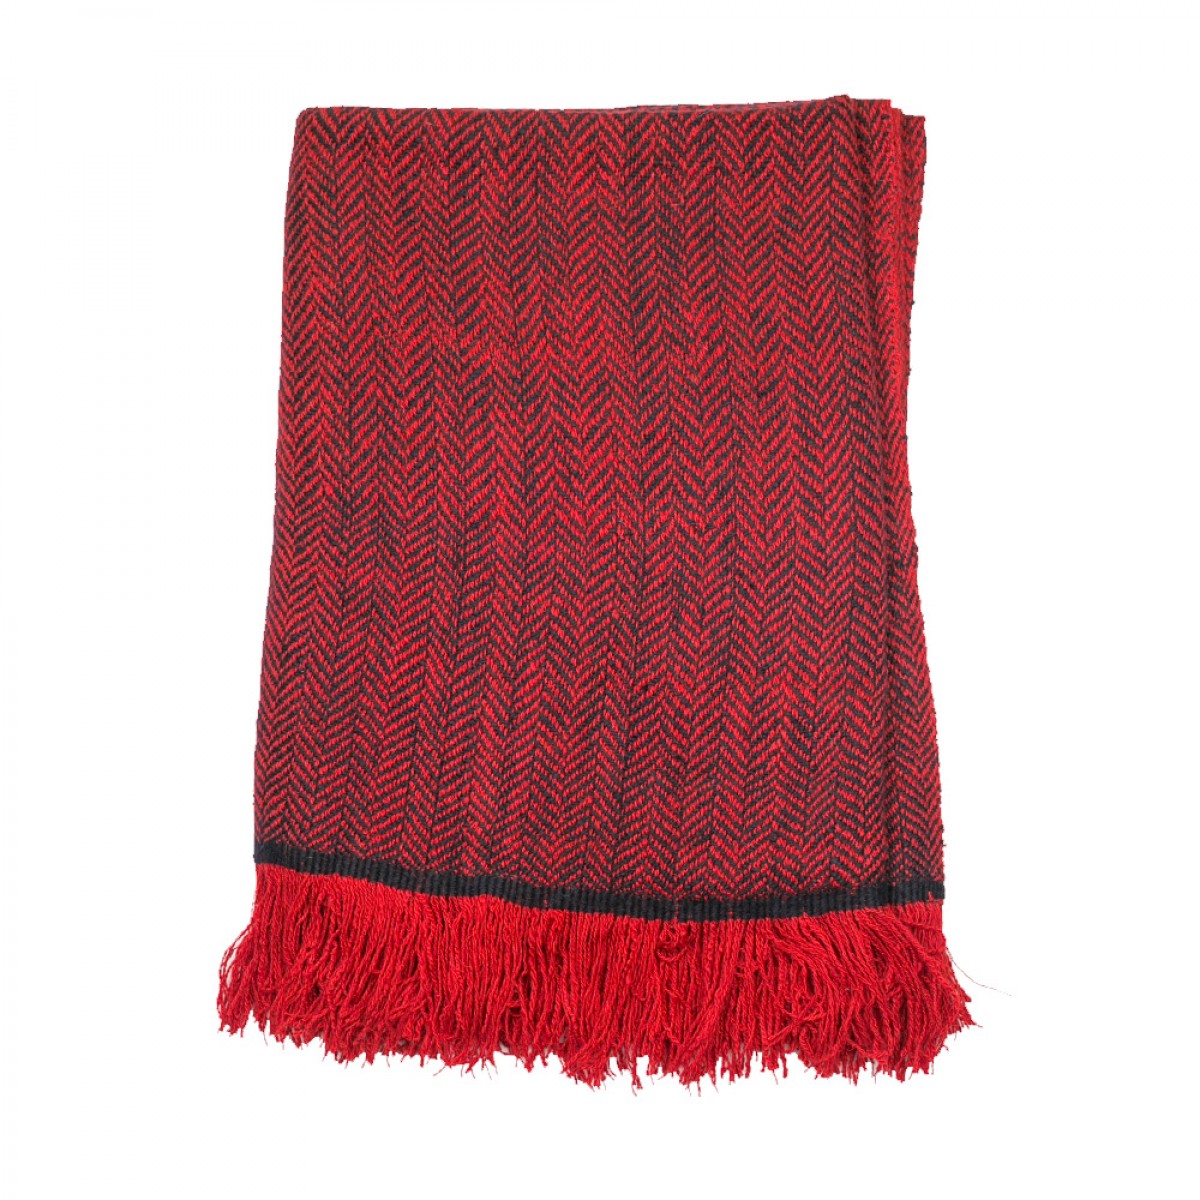 Red & Black Herringbone Weave Cashmere Blanket (Made to Order)